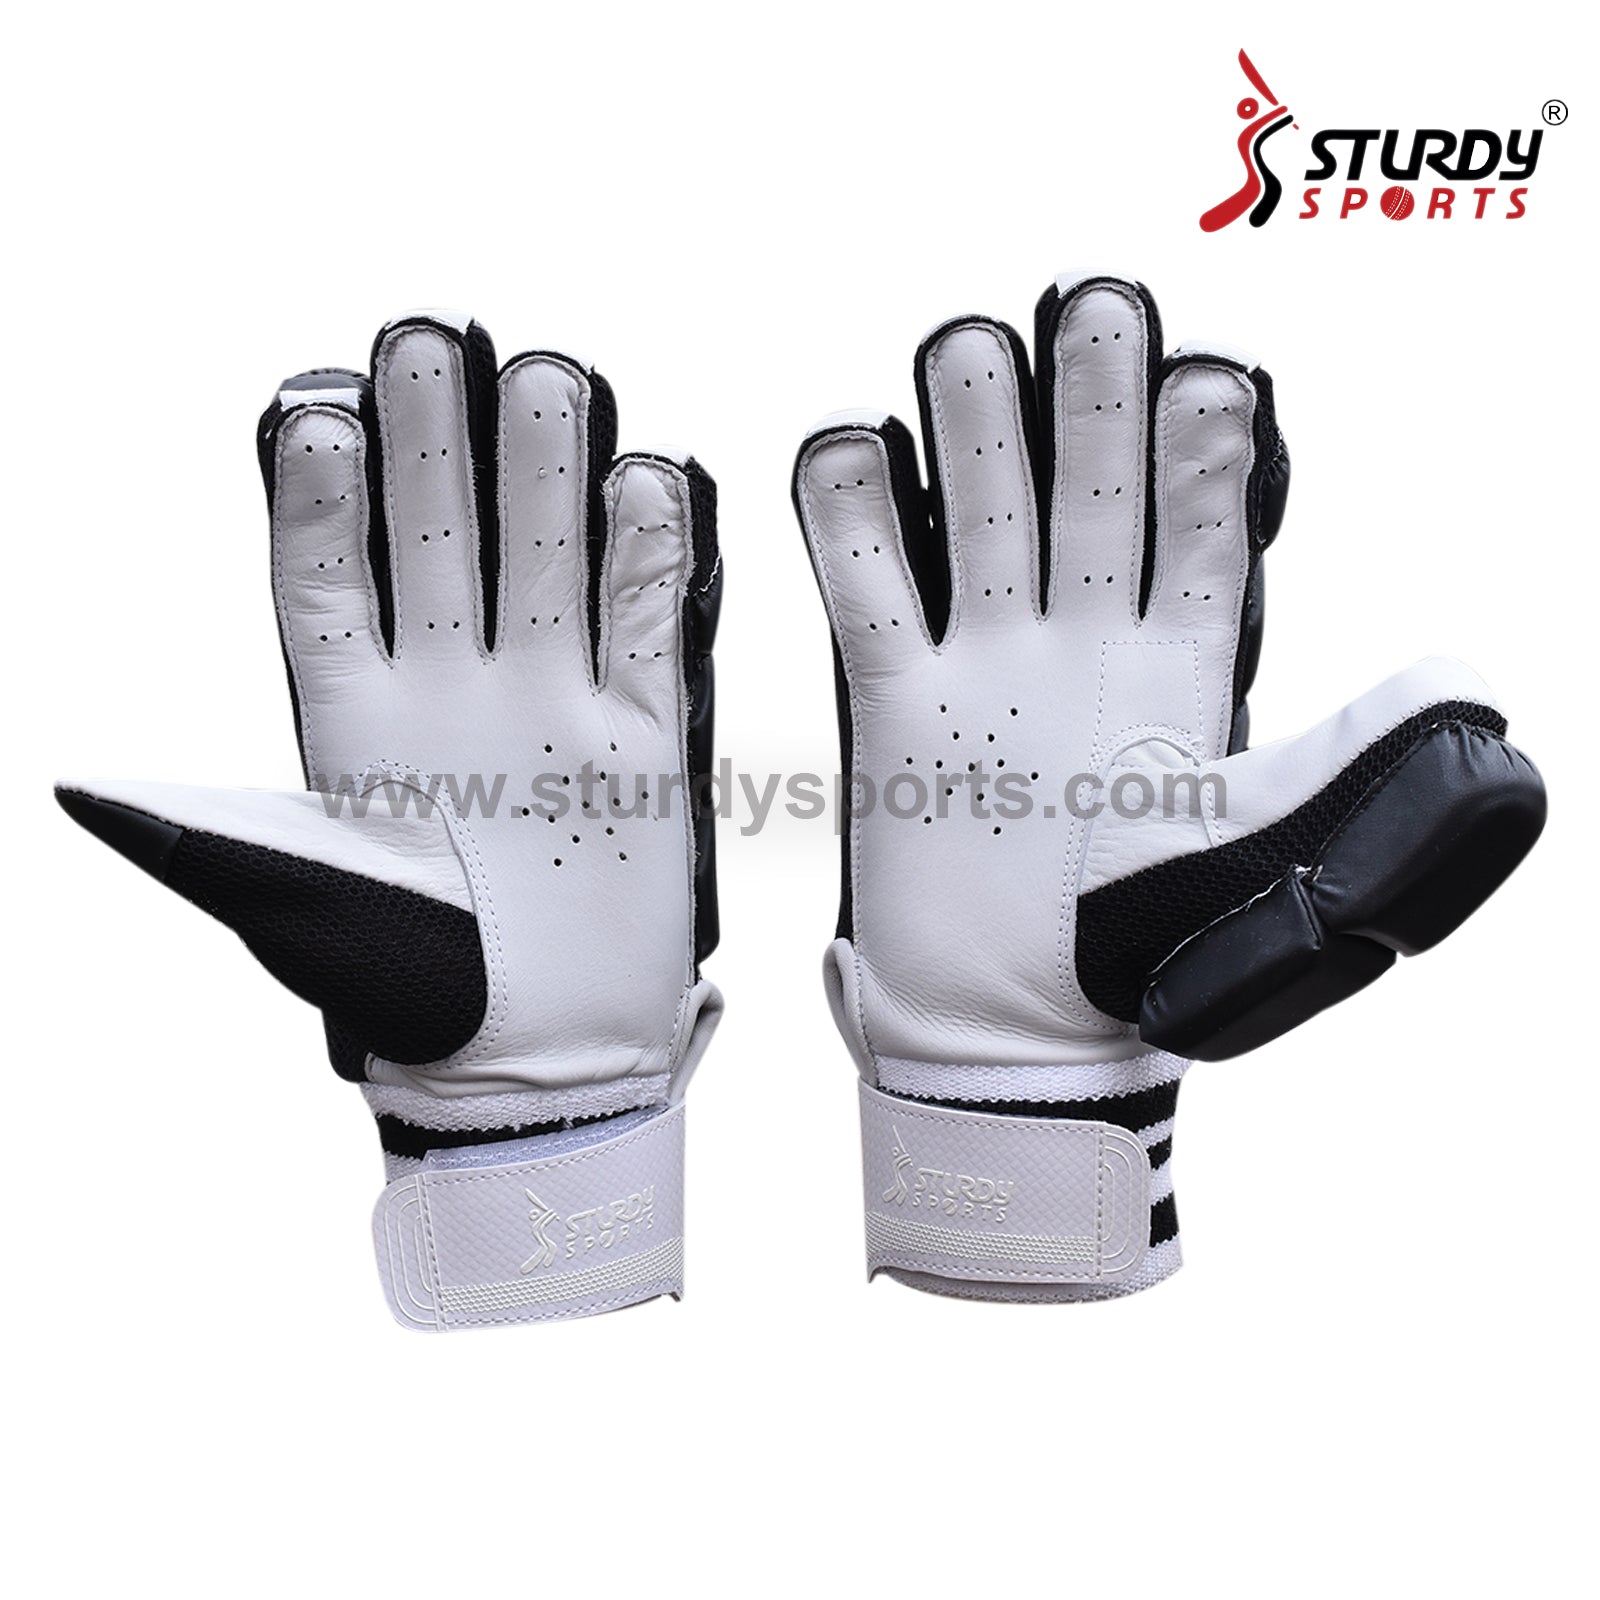 Sturdy Dragon Black Cricket Batting Gloves - Senior